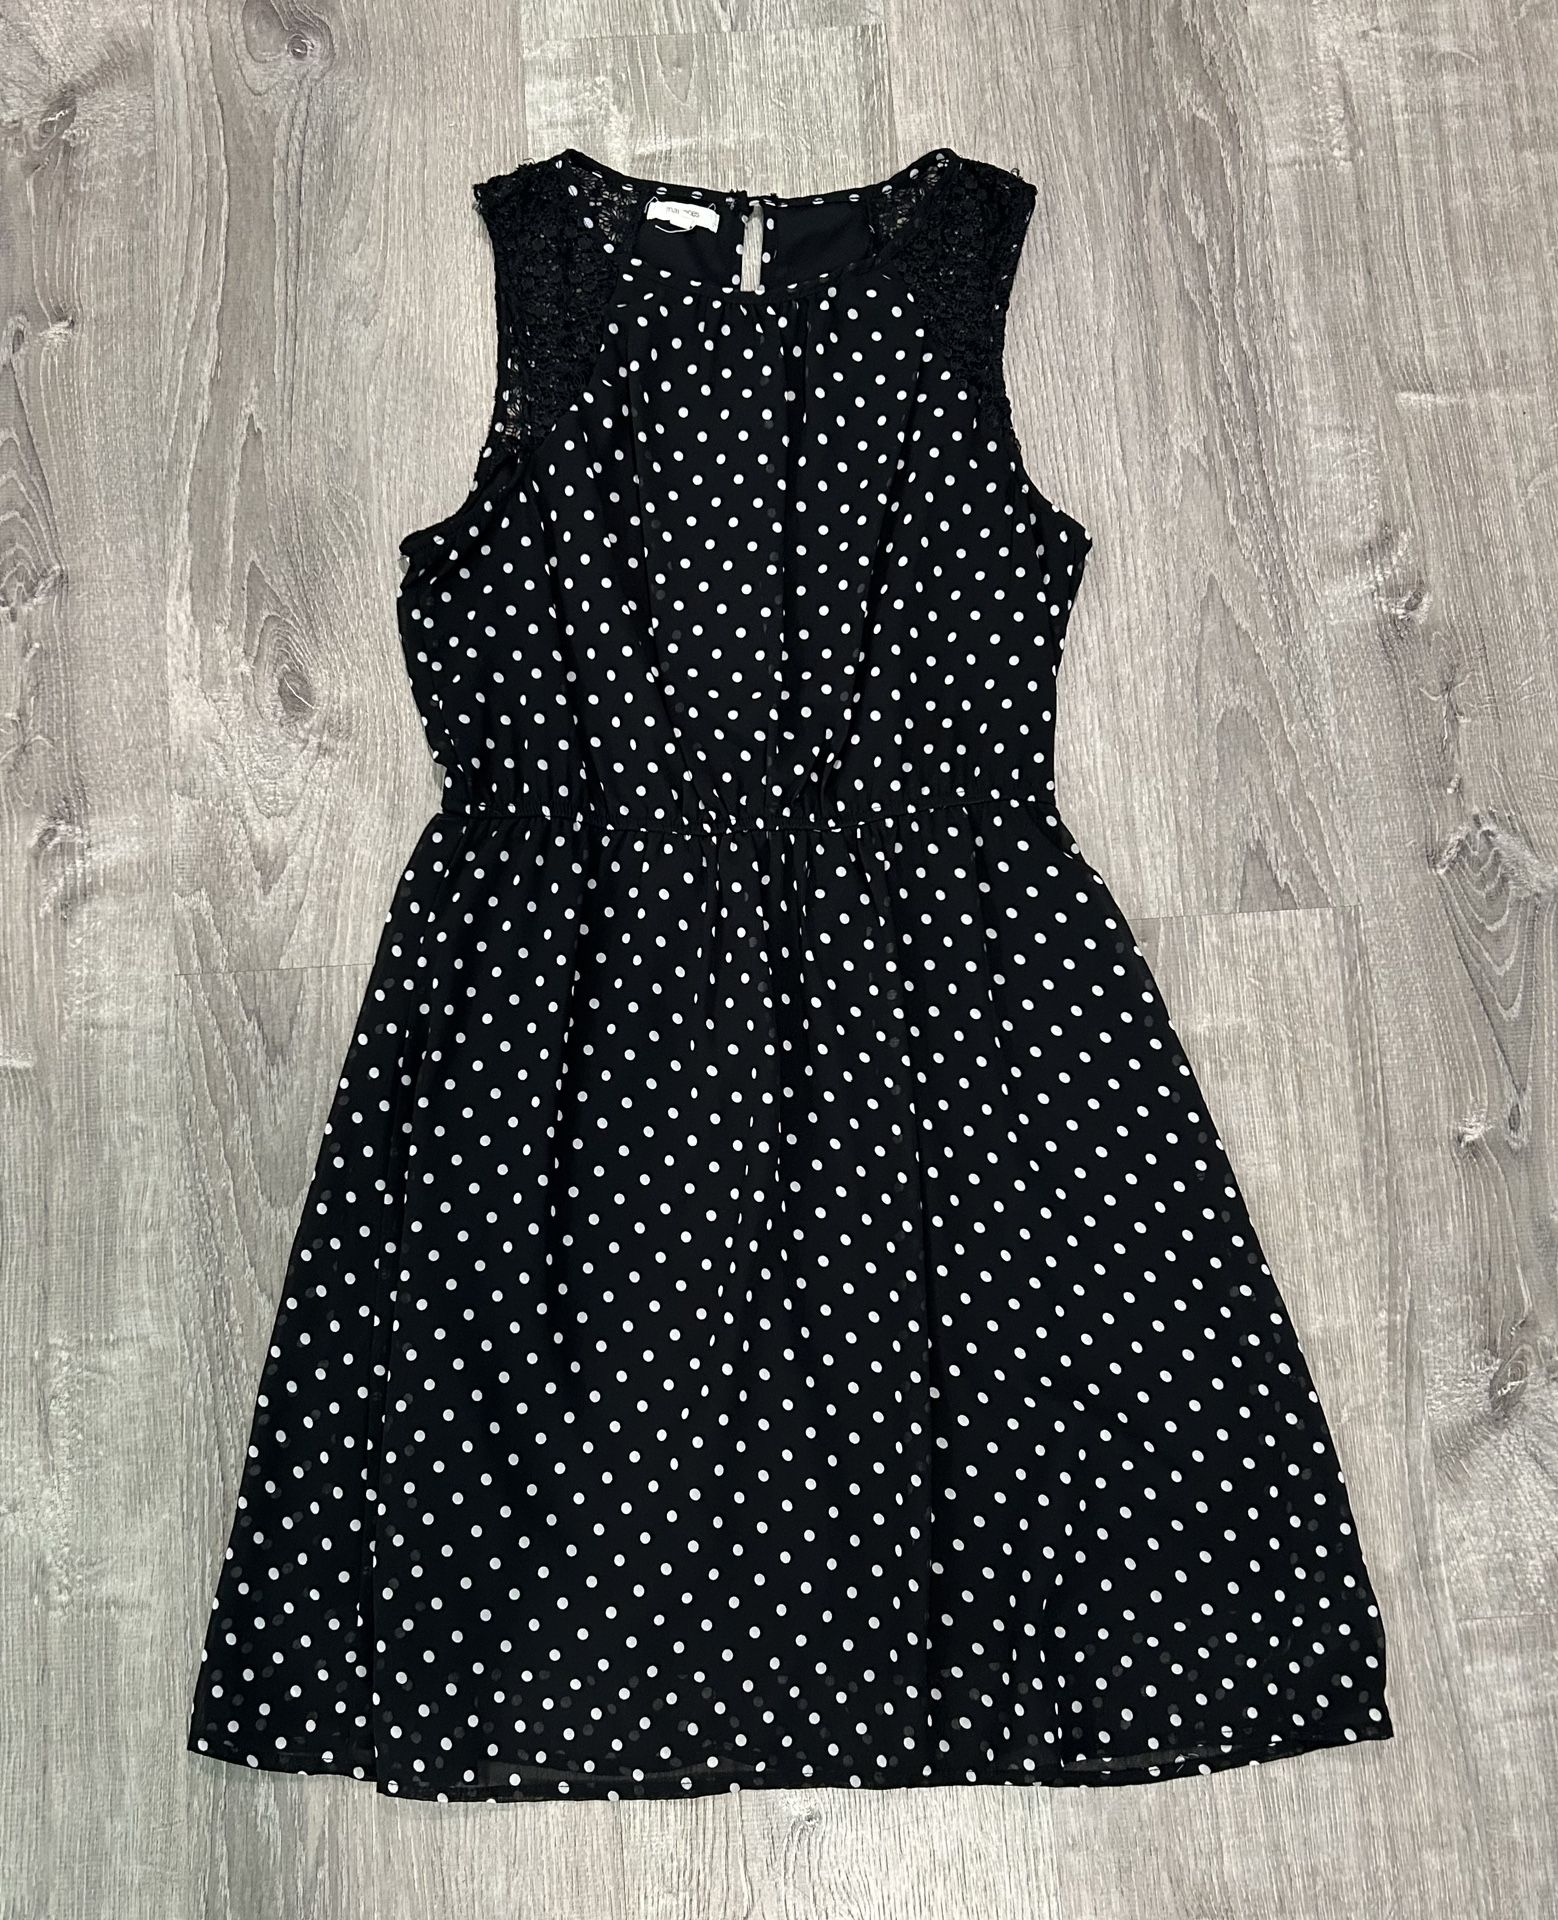 Maurice’s Sleeveless Black Dress With White Polka Dots